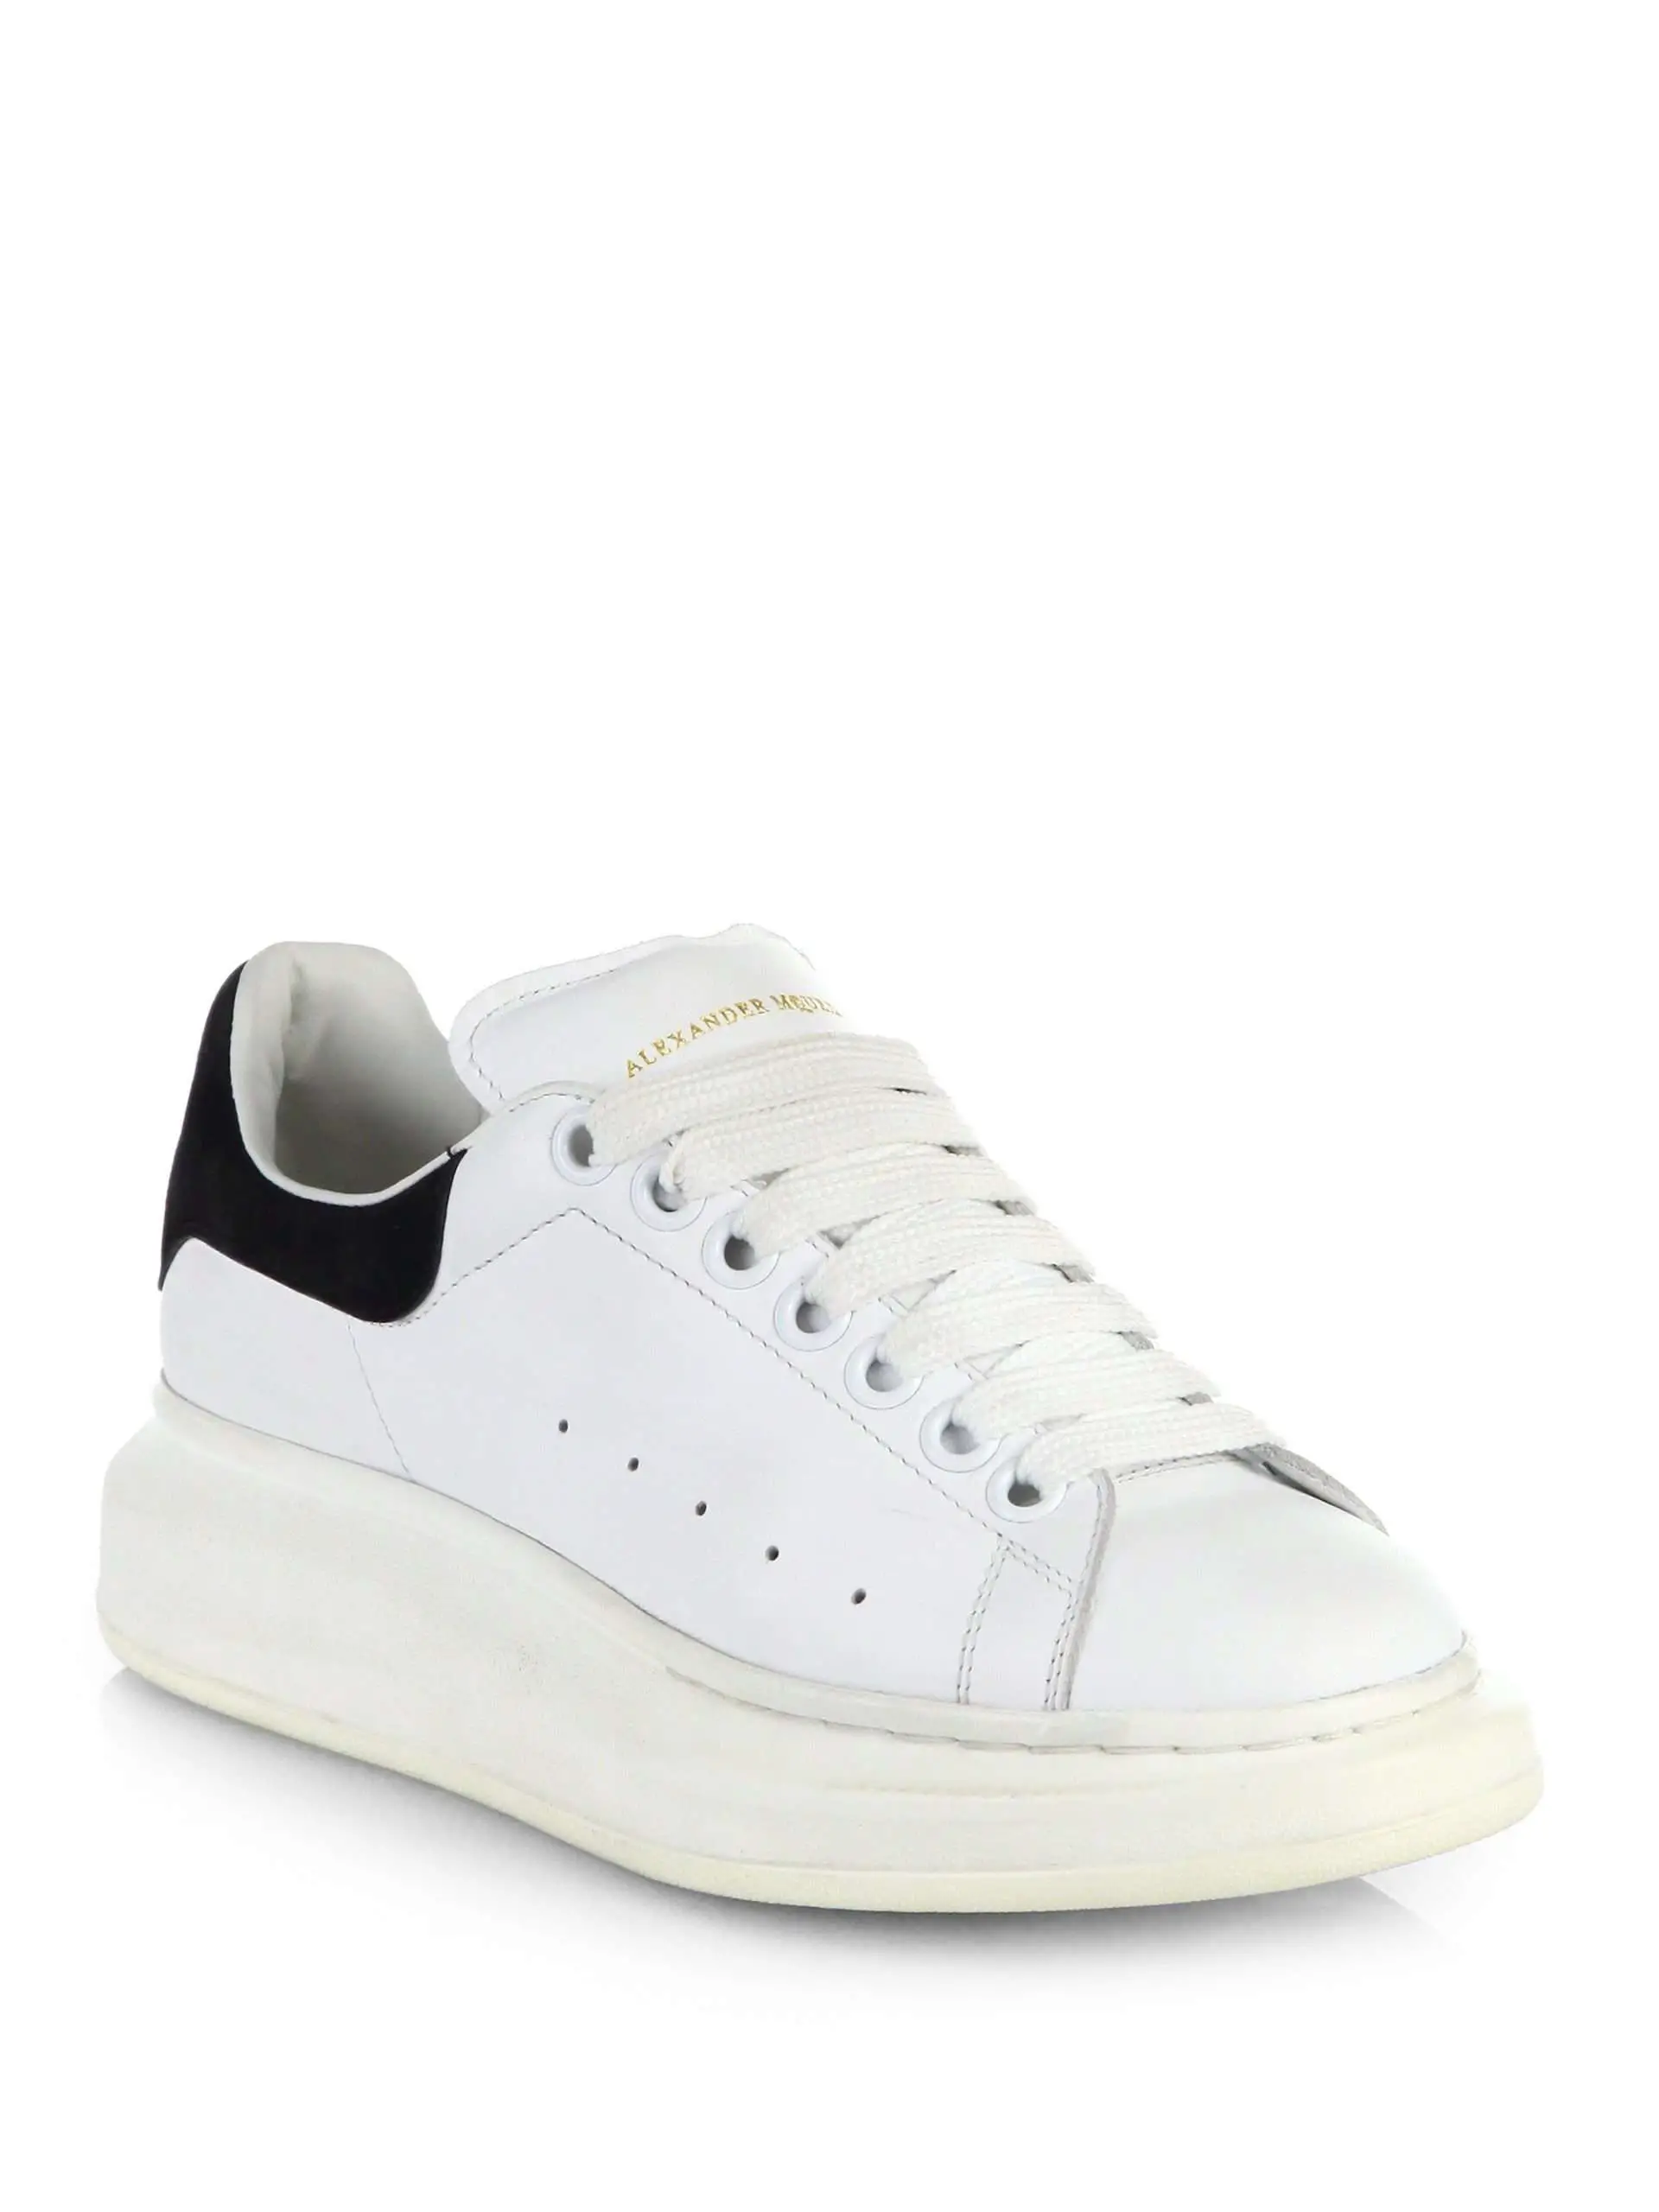 Alexander mcqueen Leather Platform Sneakers in White